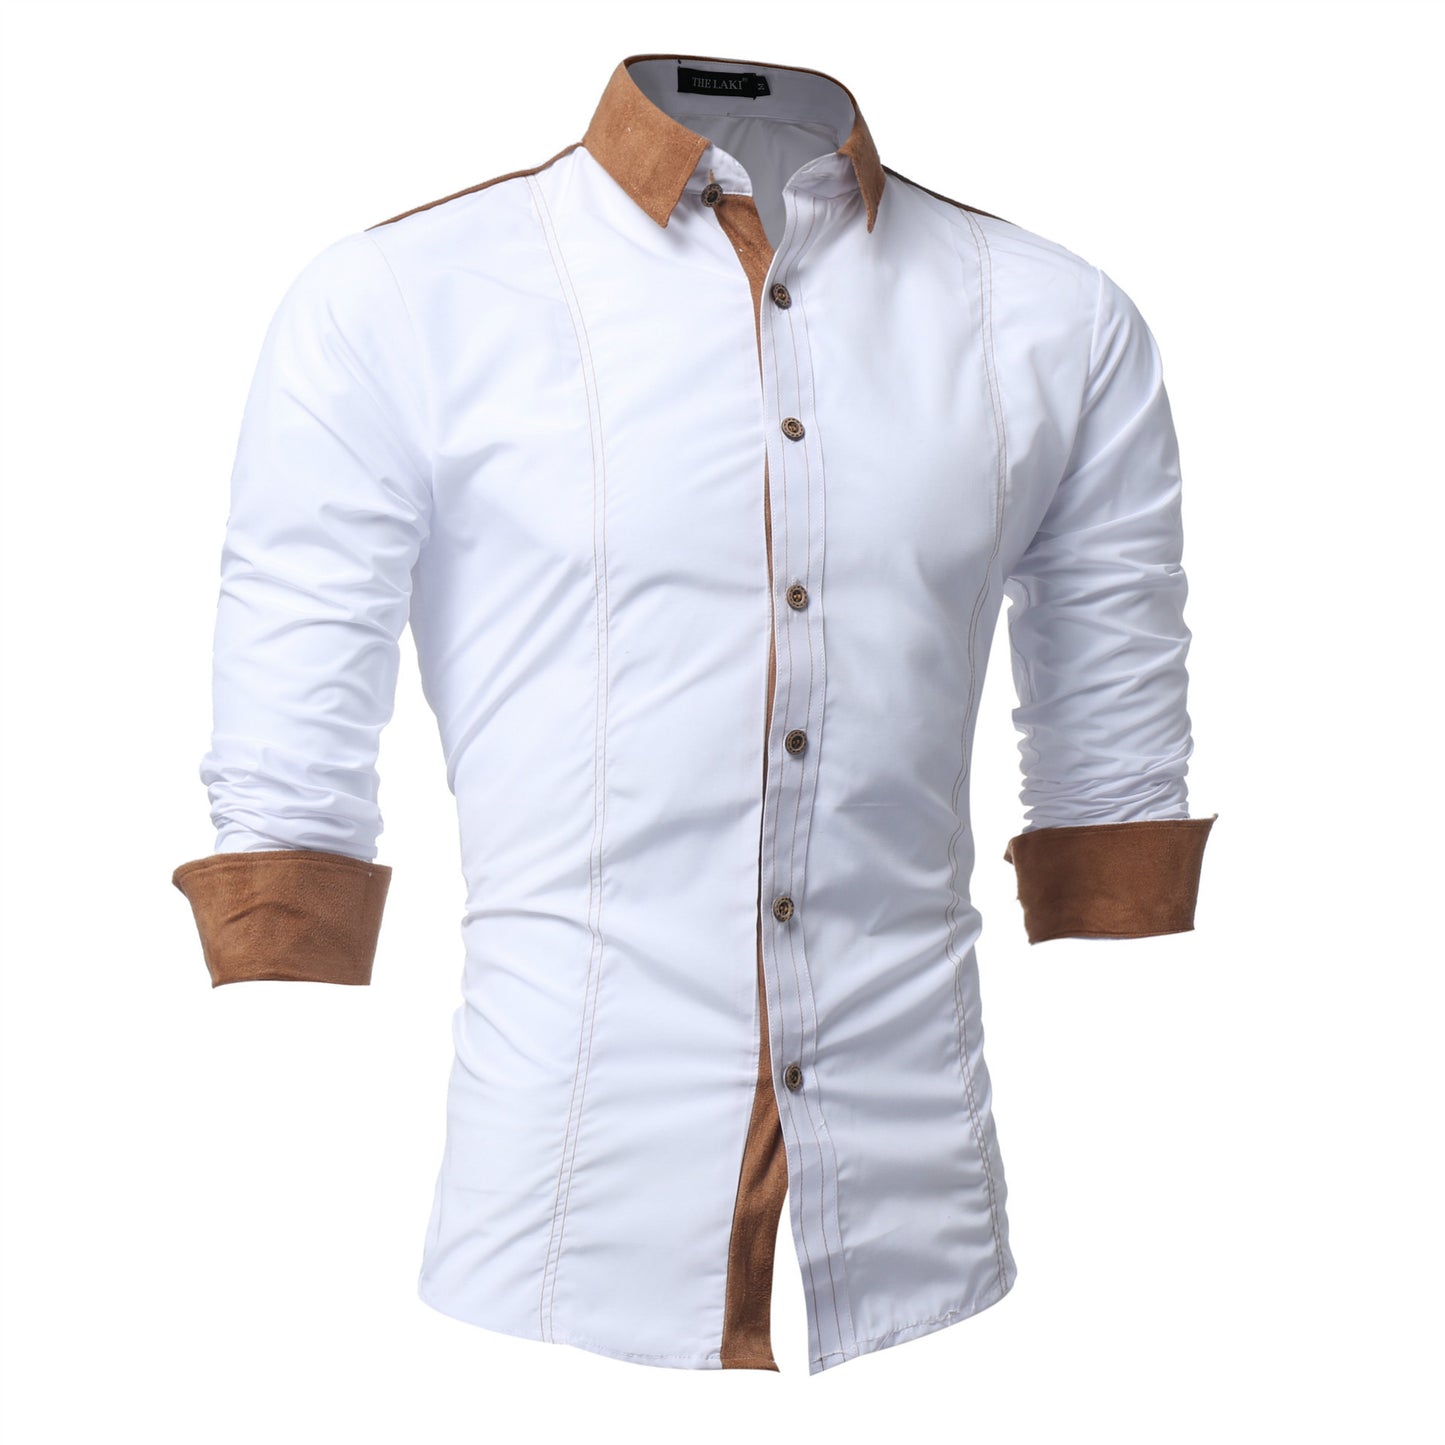 European And American Men's Long-sleeved Shirts Featuring Deerskin Collar Shirts